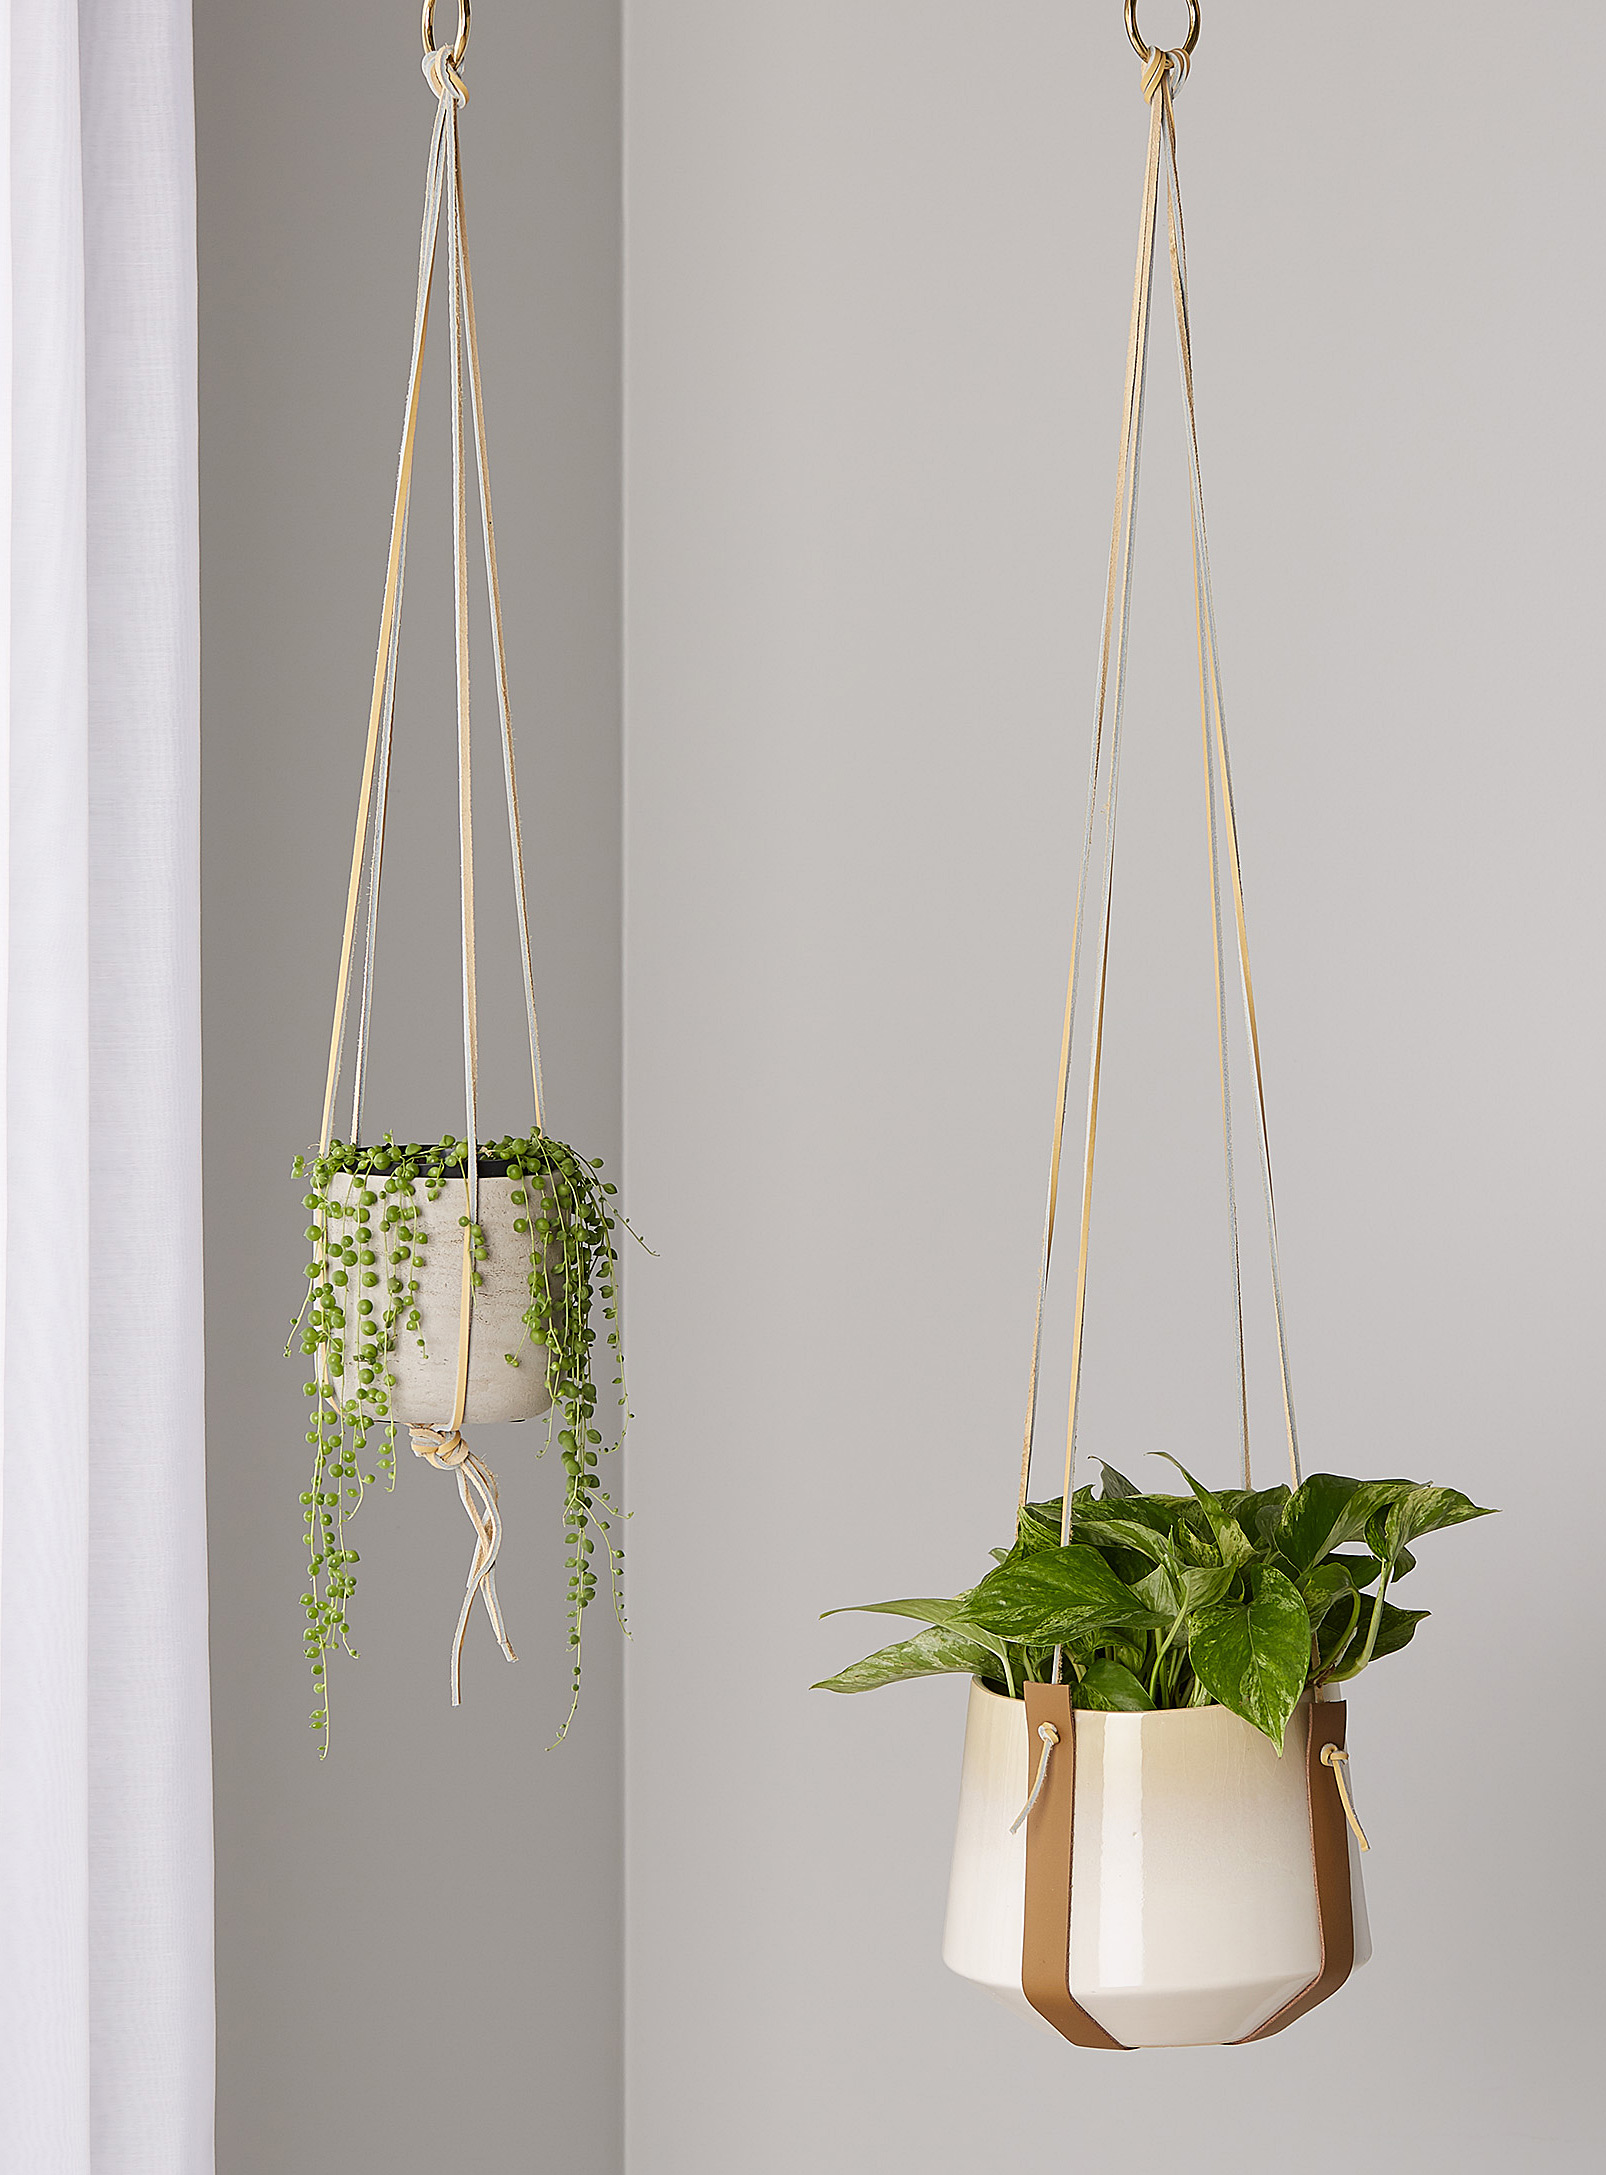 M Forioso - Set of 2 leather plant hangers